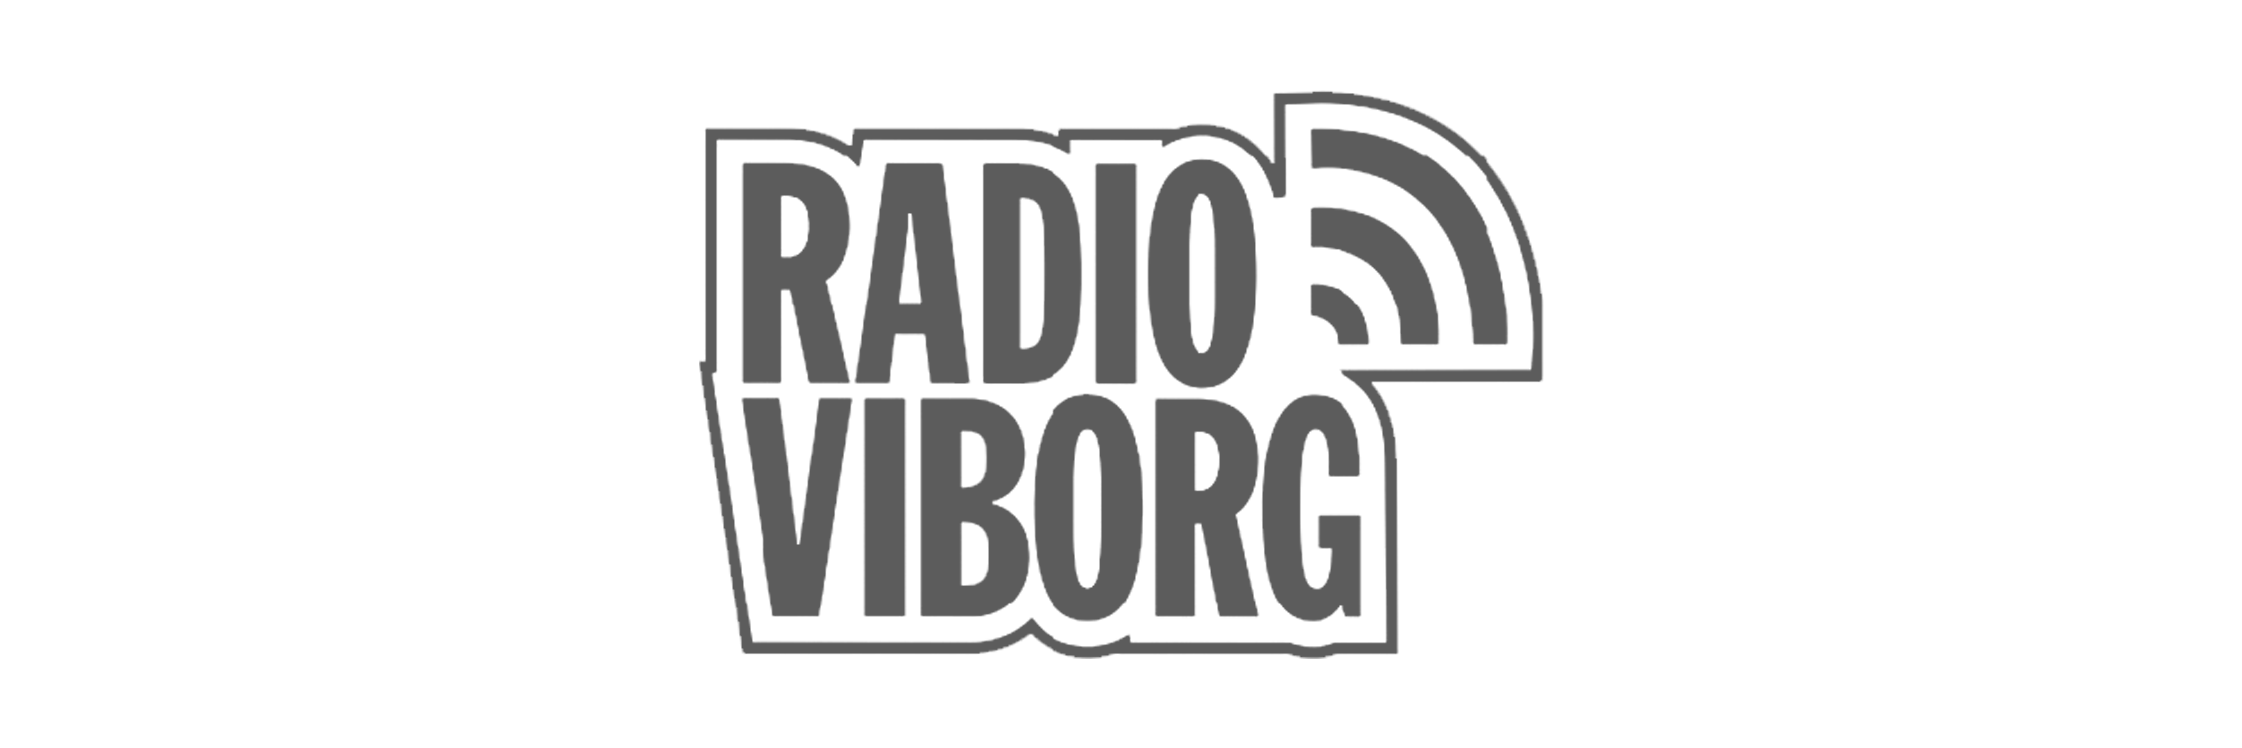 radio viborg